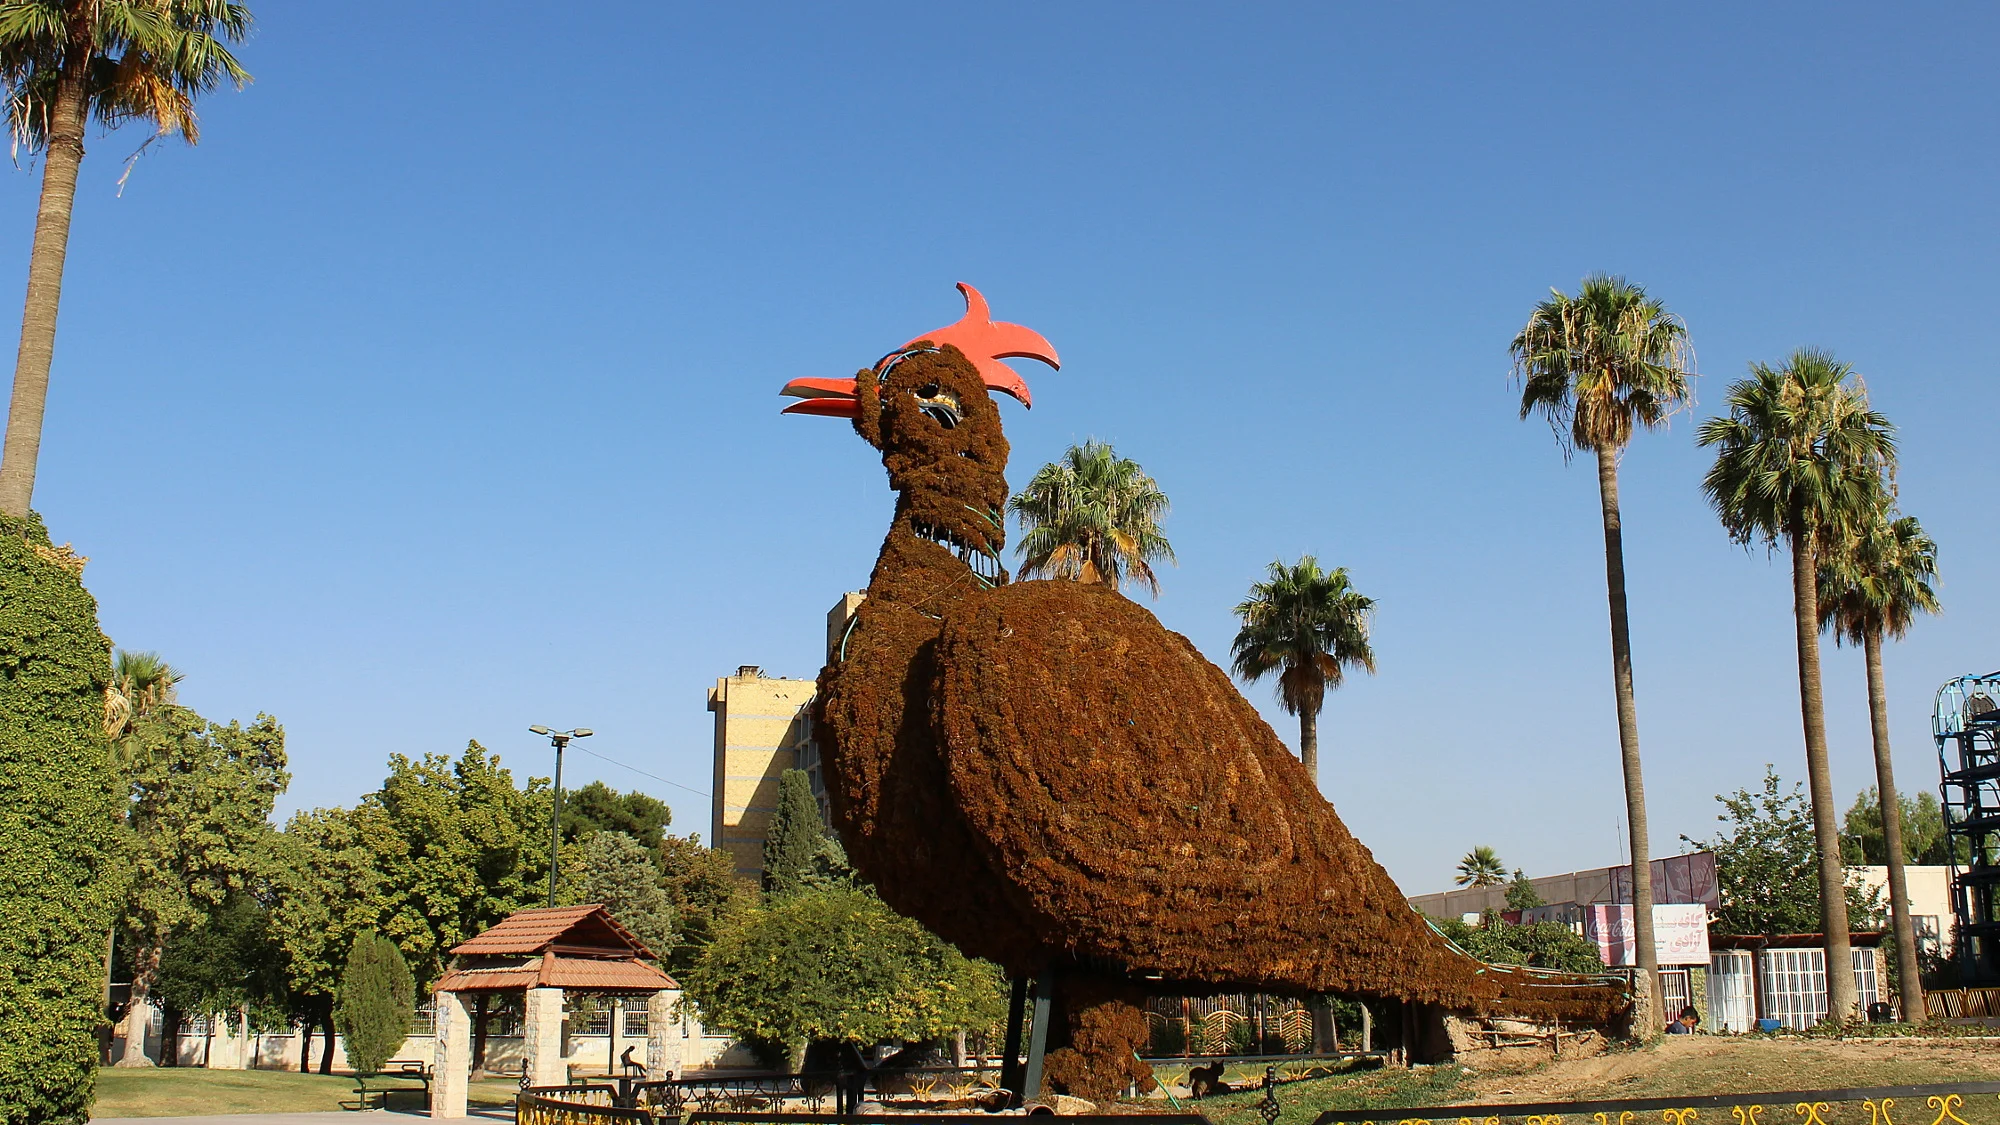 A giant chicken statue in a park in Shiraz.